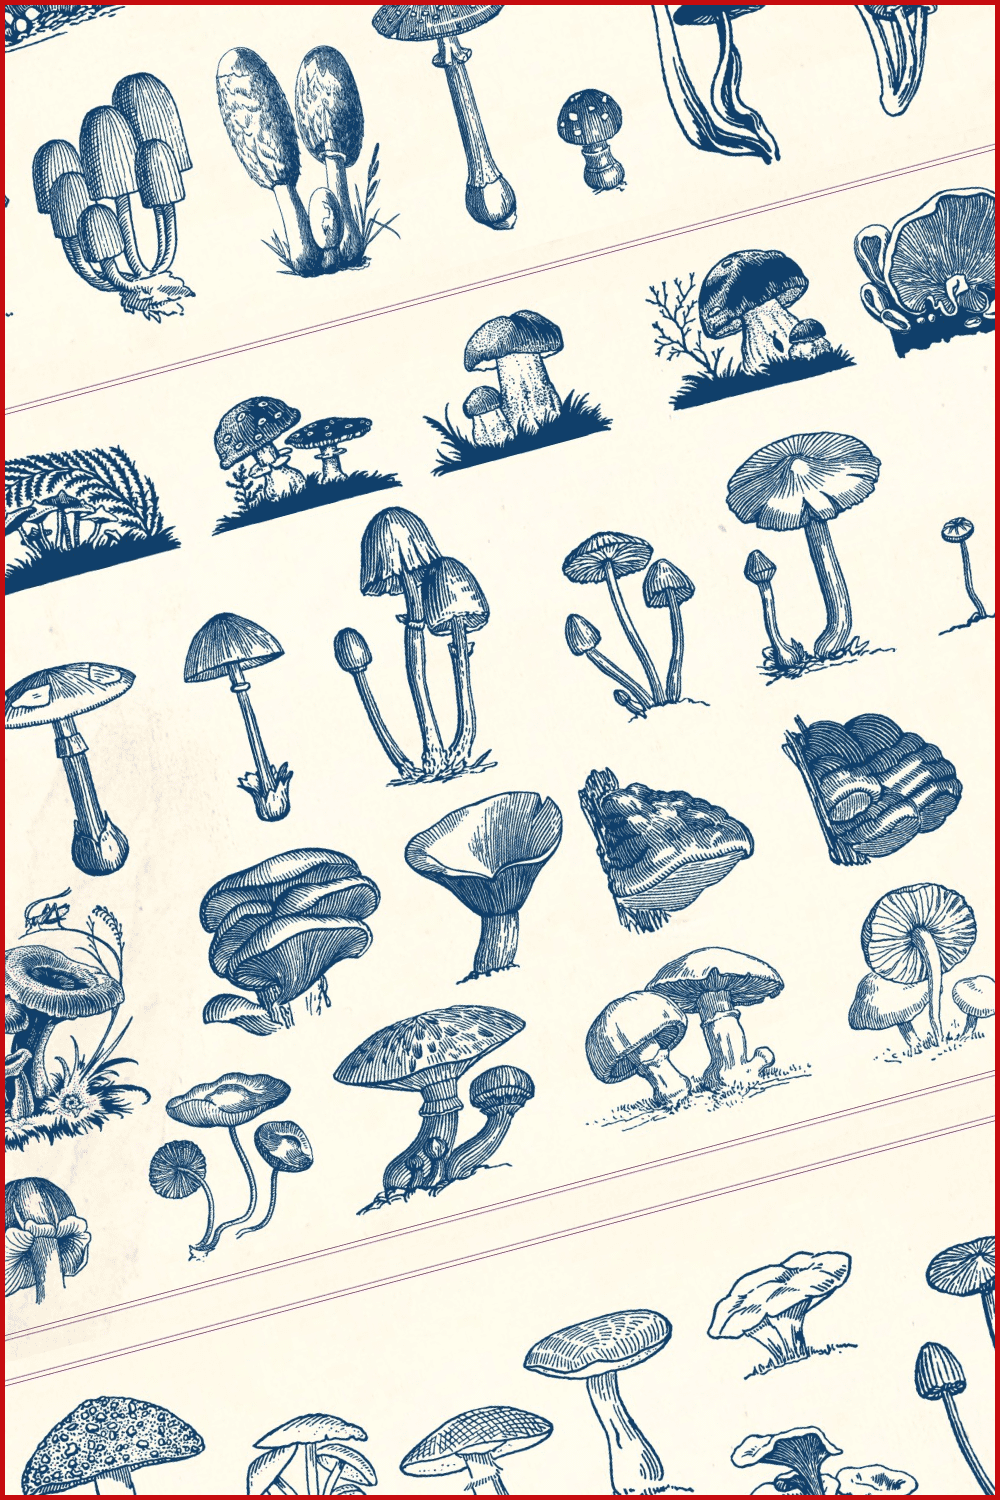 Vintage mushrooms - pinterest image preview.